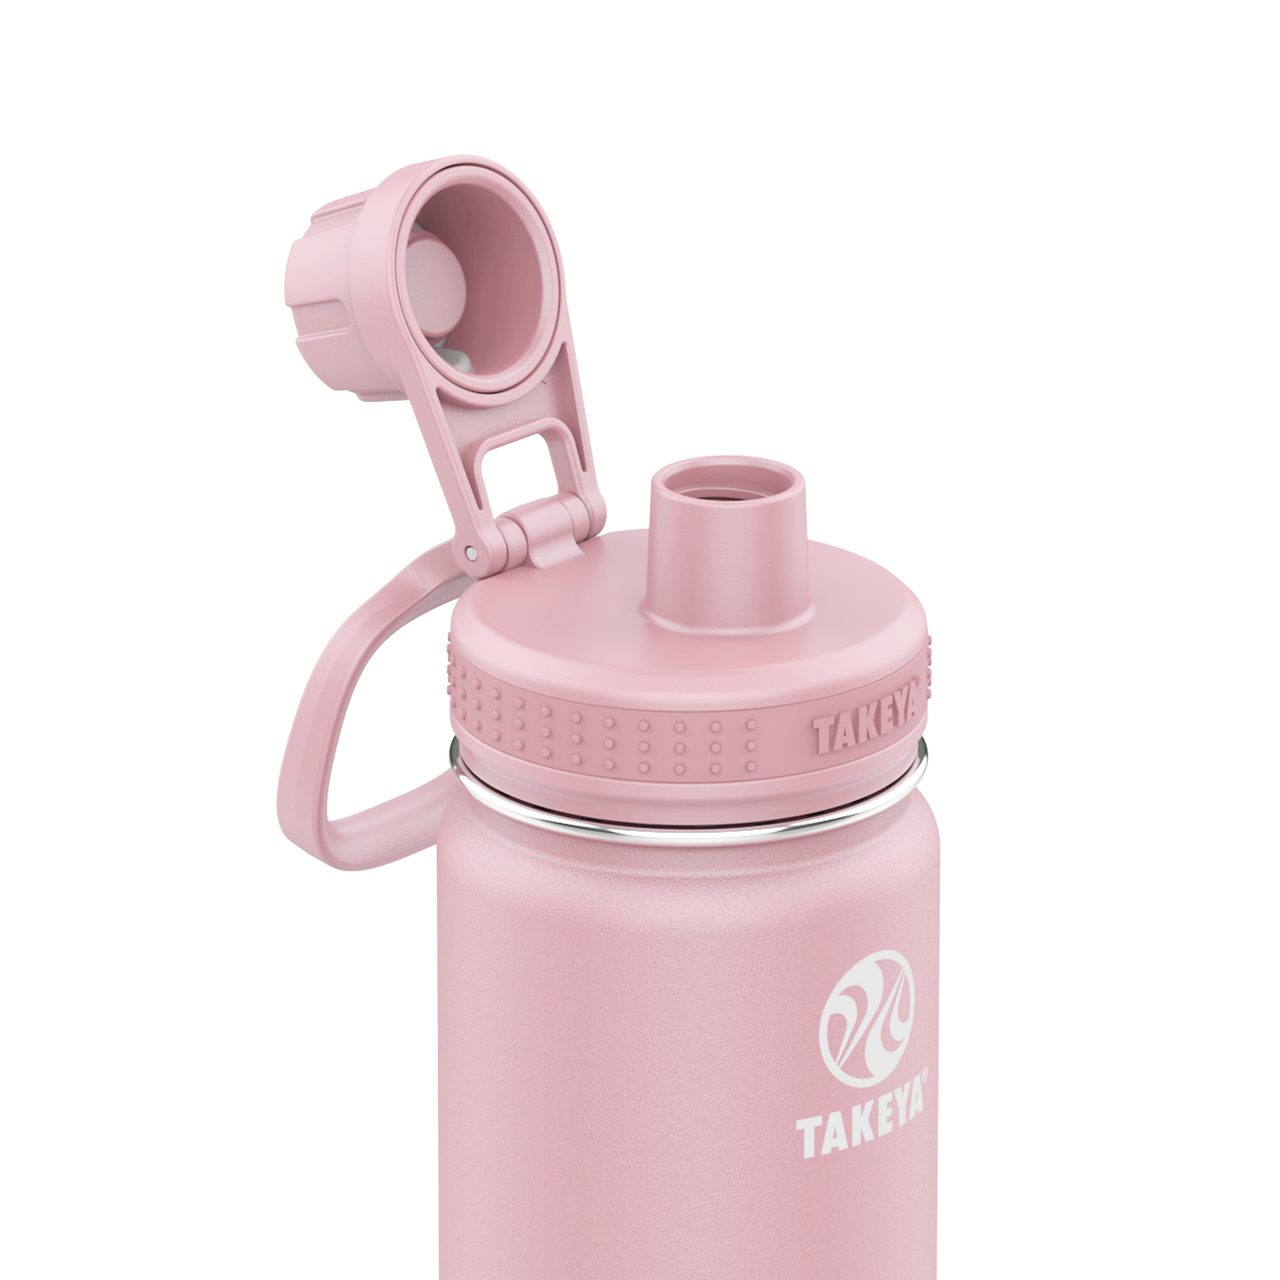 Takeya 24 Oz Blush Actives Insulated Water Bottle - 51054